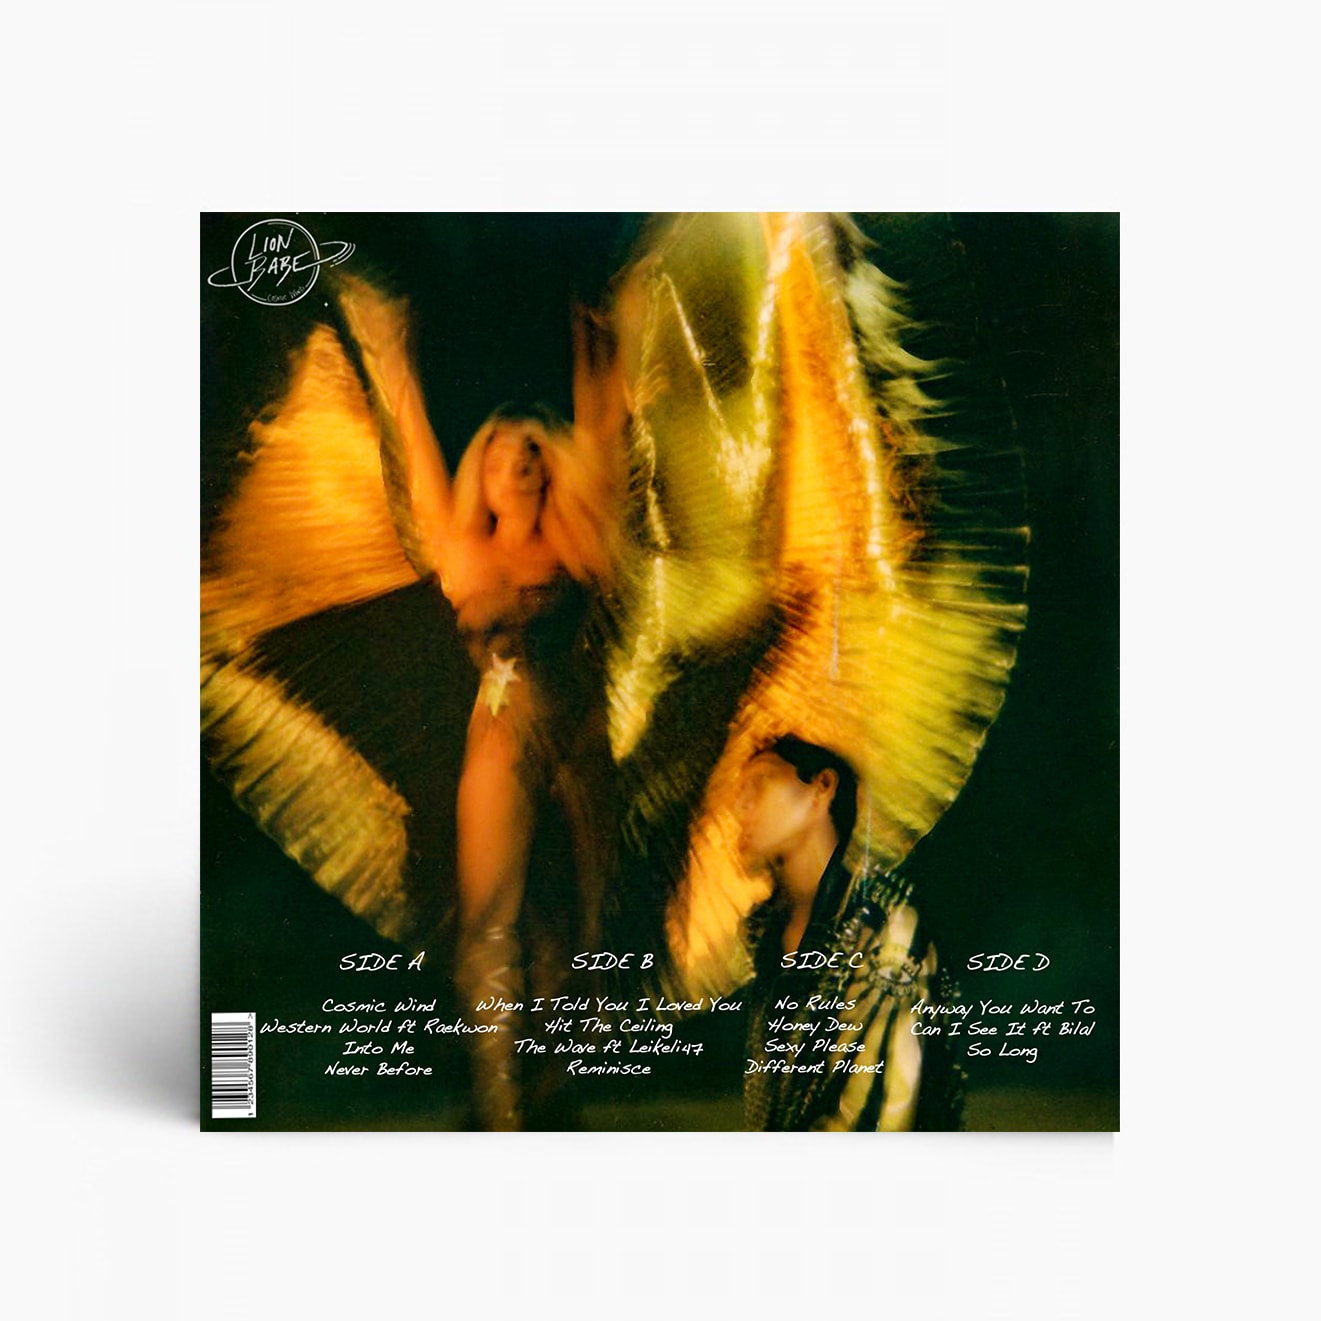 Cosmic Wind Vinyl LP